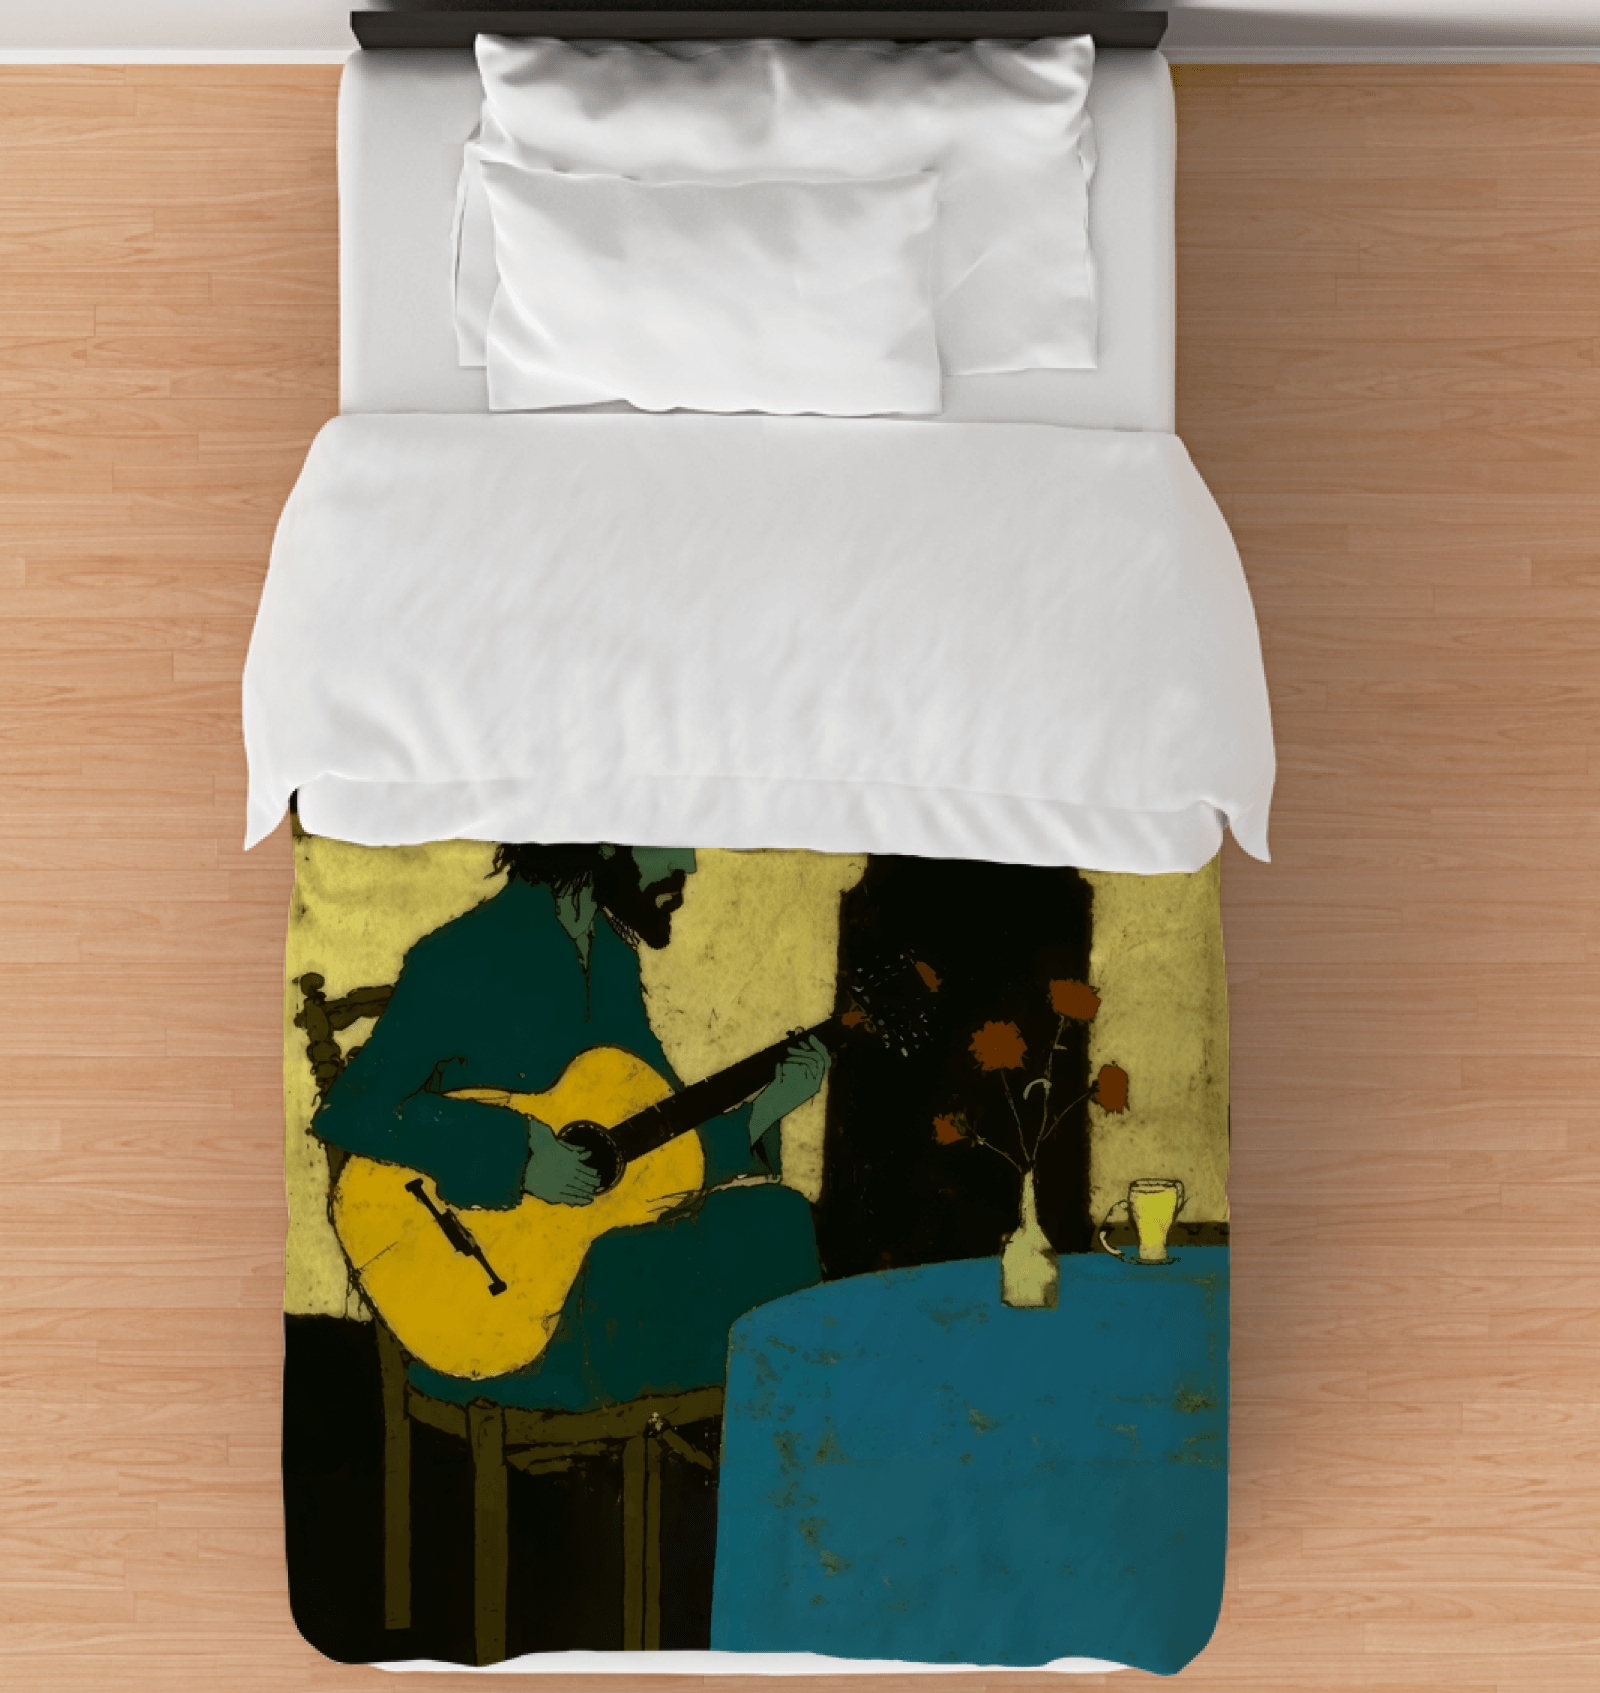 Sonic Serenity Comforter: Elegant Music-Inspired Bedding - Beyond T-shirts